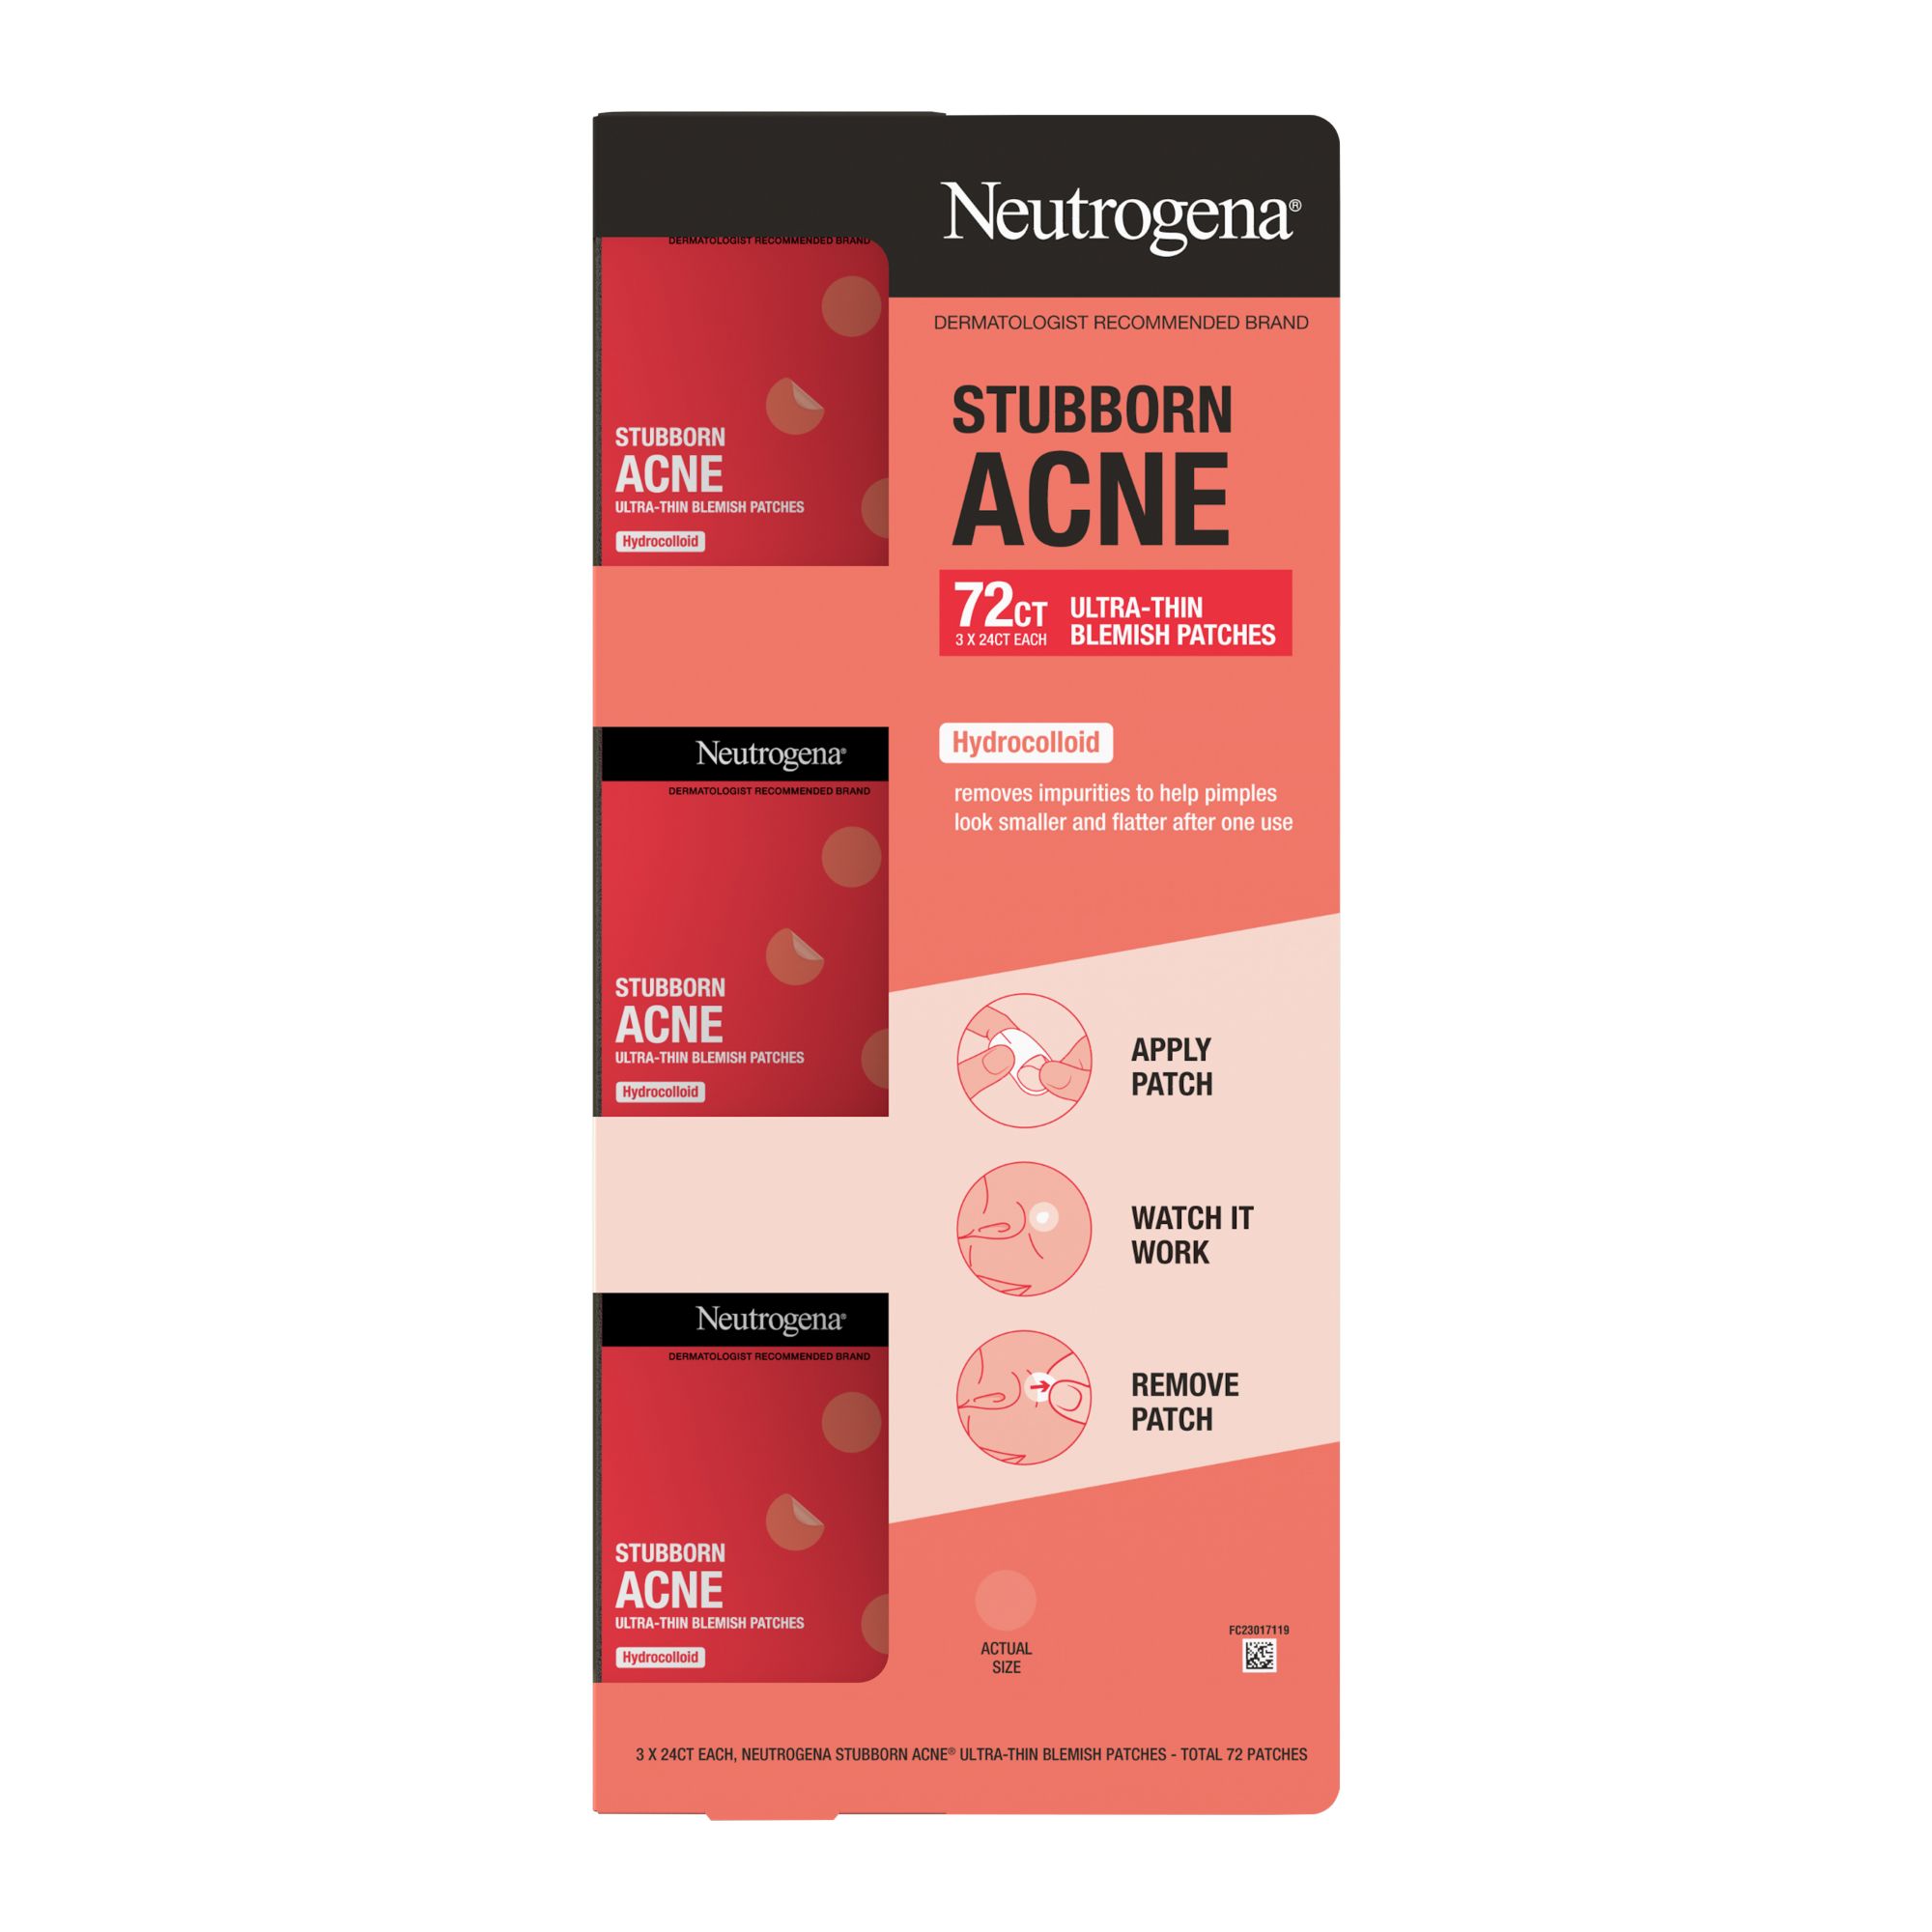 Neutrogena Stubborn Acne Ultra-Thin Blemish Patches, 72 ct.